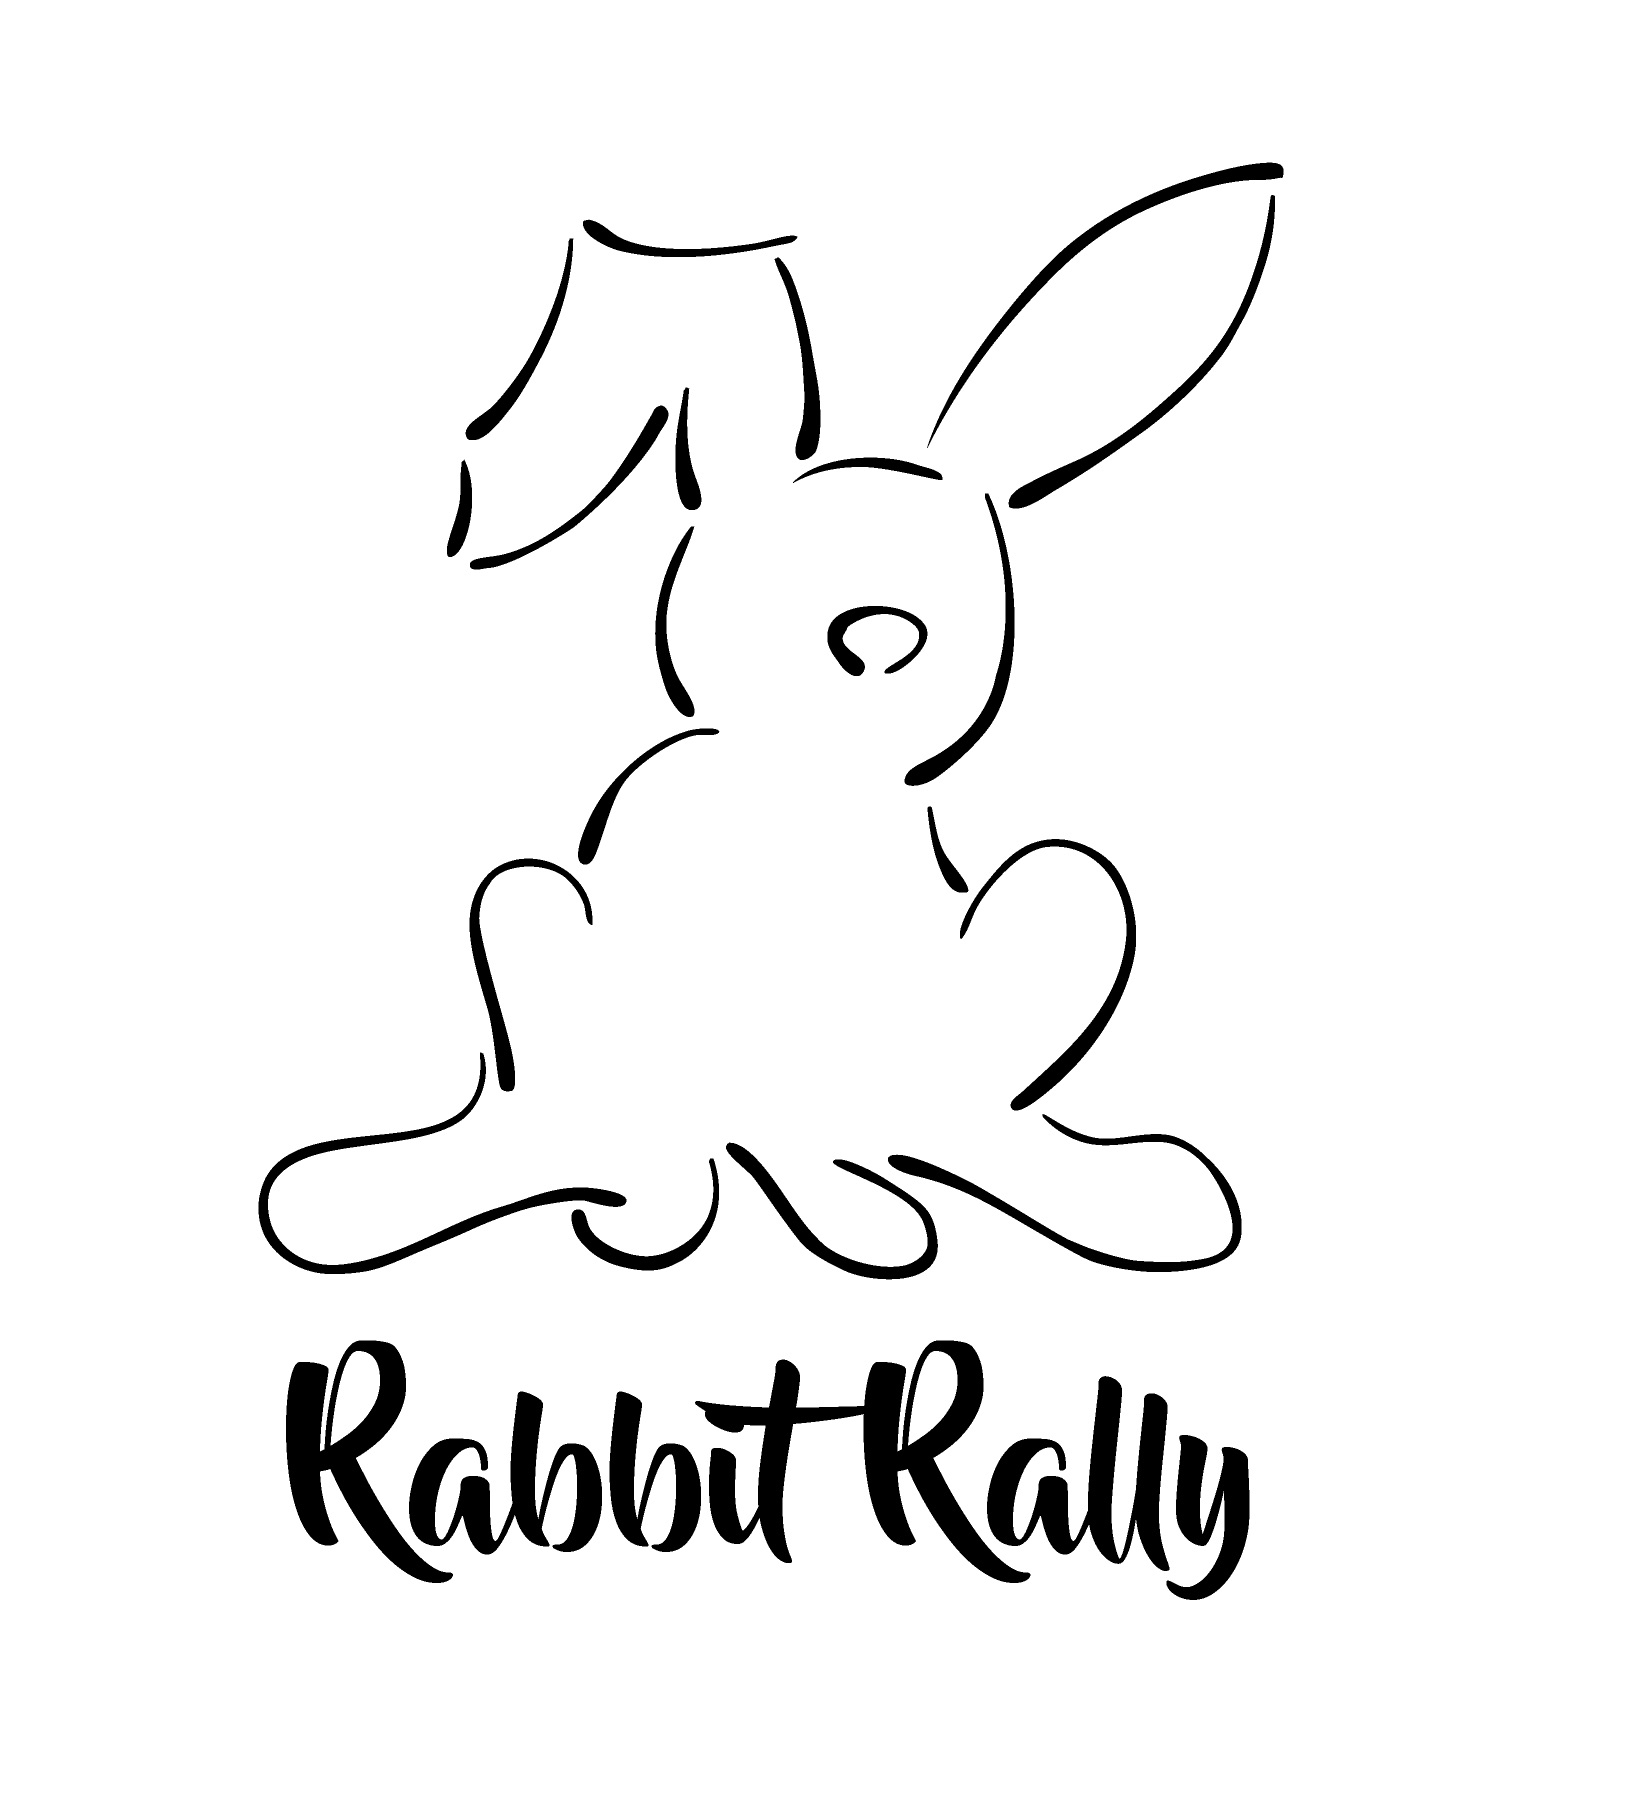 Rabbit Rally 2020